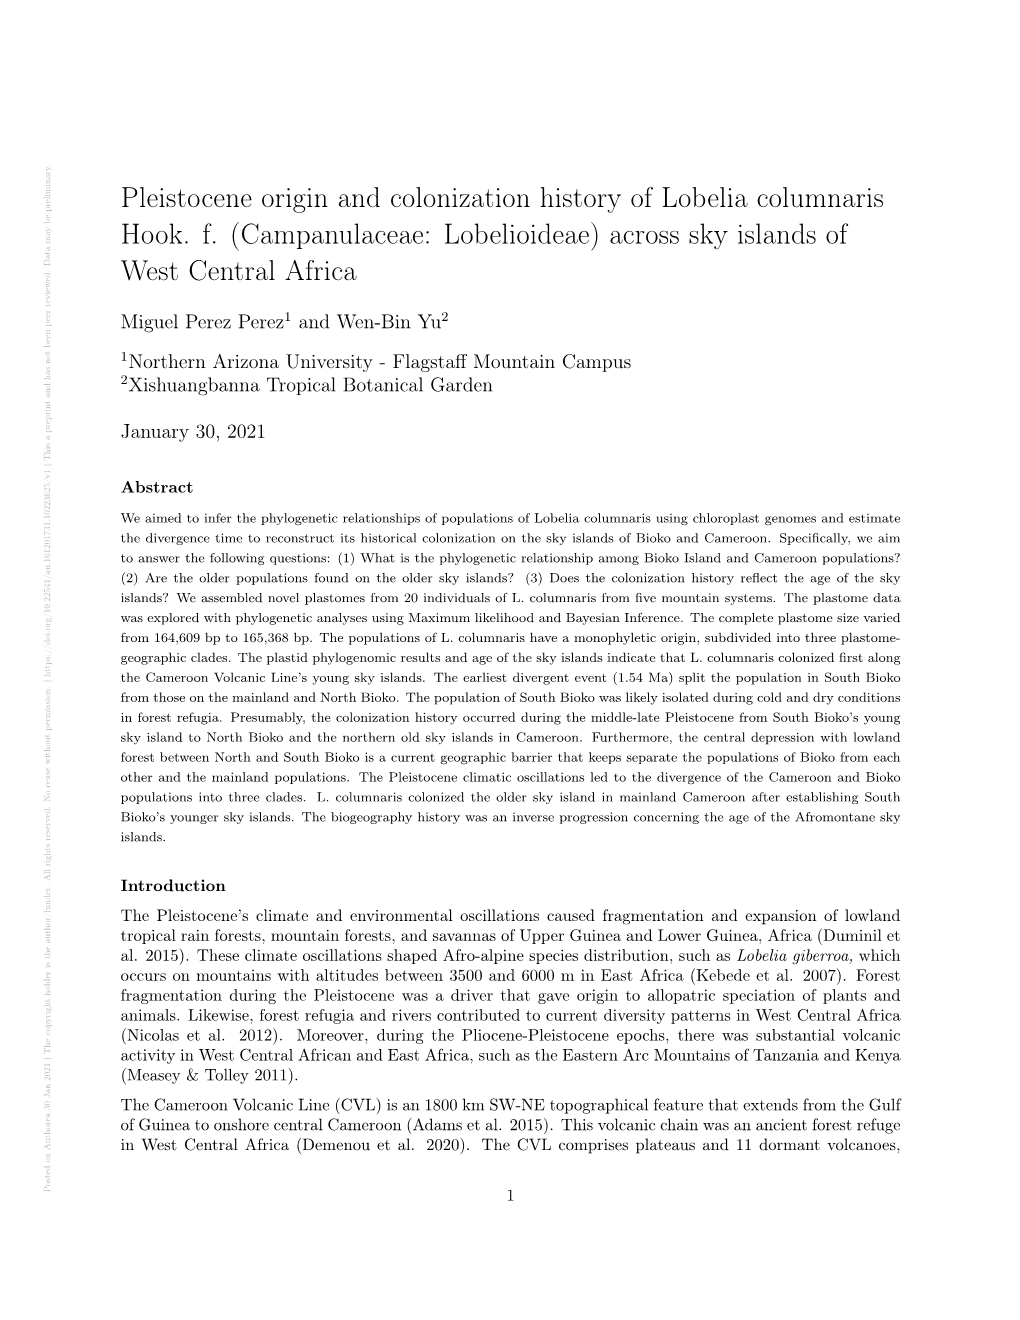 Pleistocene Origin and Colonization History of Lobelia Columnaris Hook. F